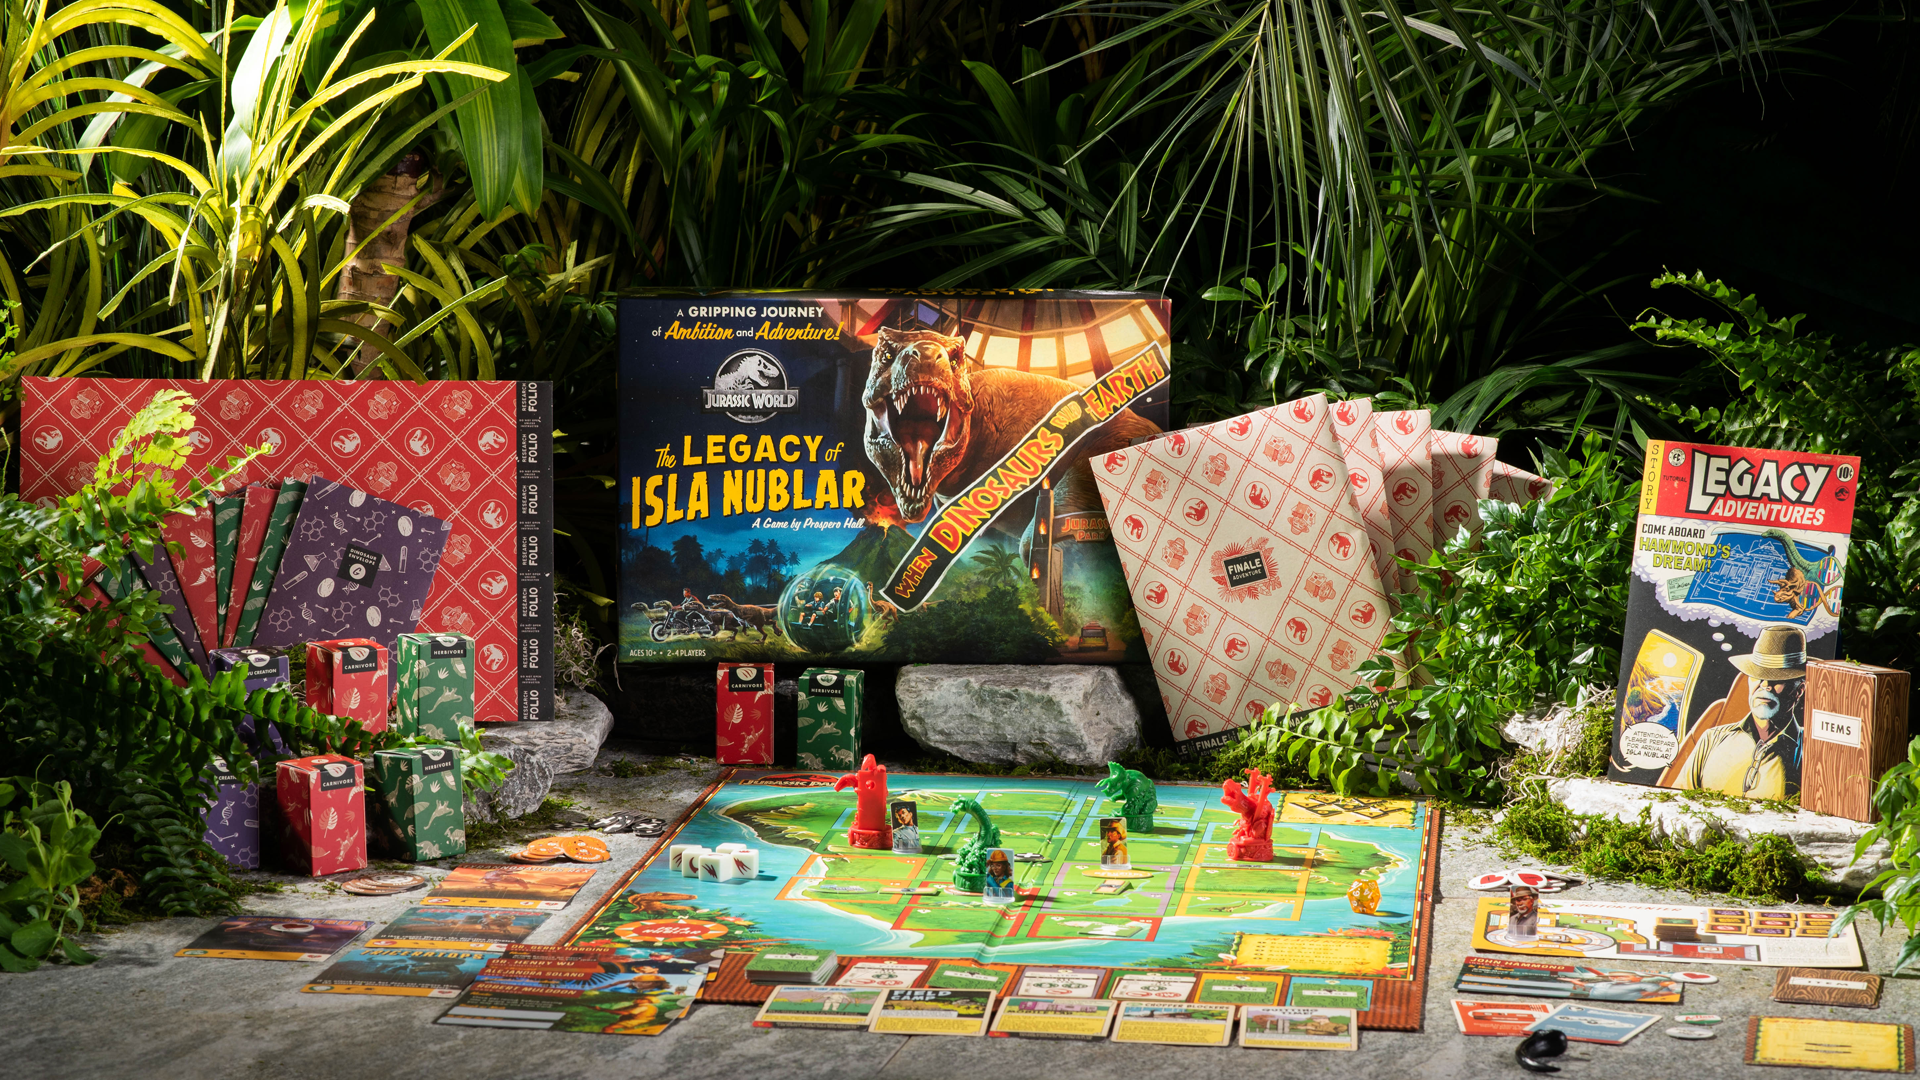 A promo image of Jurassic World: Legacy of Isla Nublar.